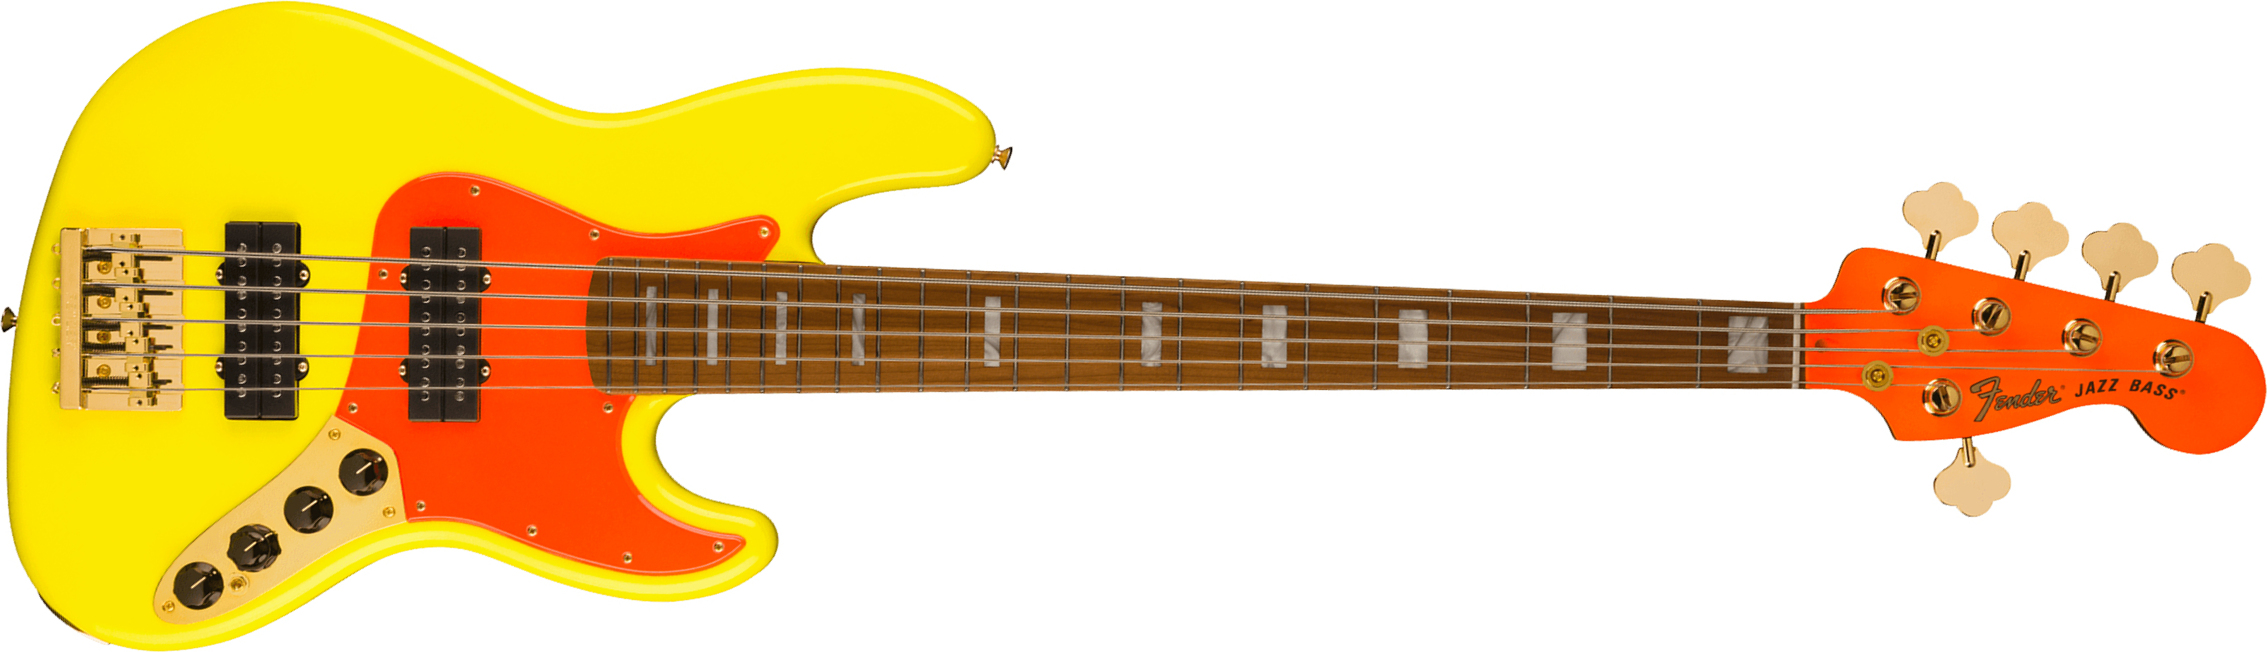 Fender Jazz Bass Mononeon V Mex Signature 5c Active Mn - Neon Yellow - Basse Électrique Solid Body - Main picture